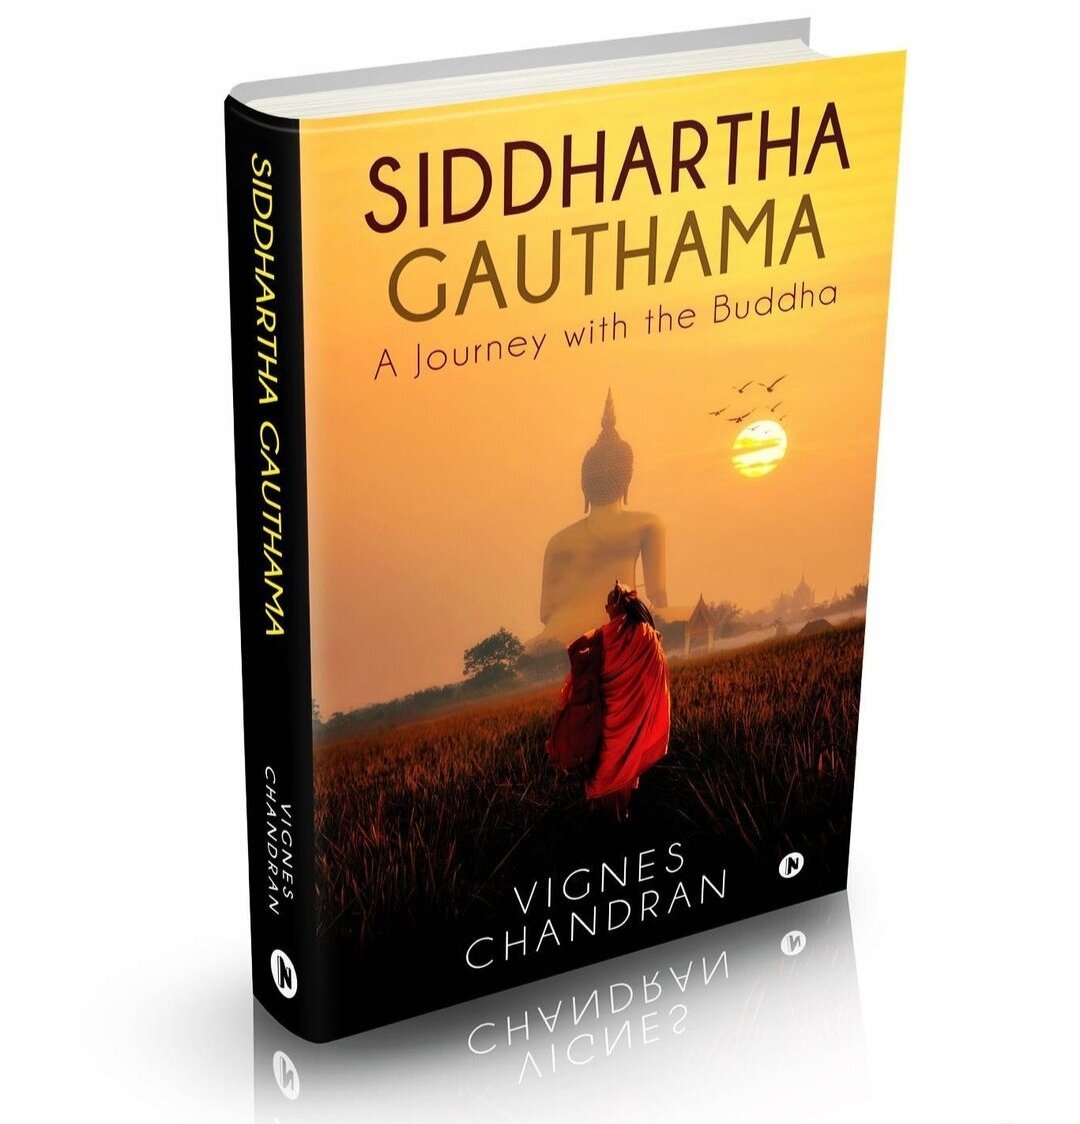 Siddhartha Gautama - A Journey with The Buddha by Vignes Chandran Malaysia